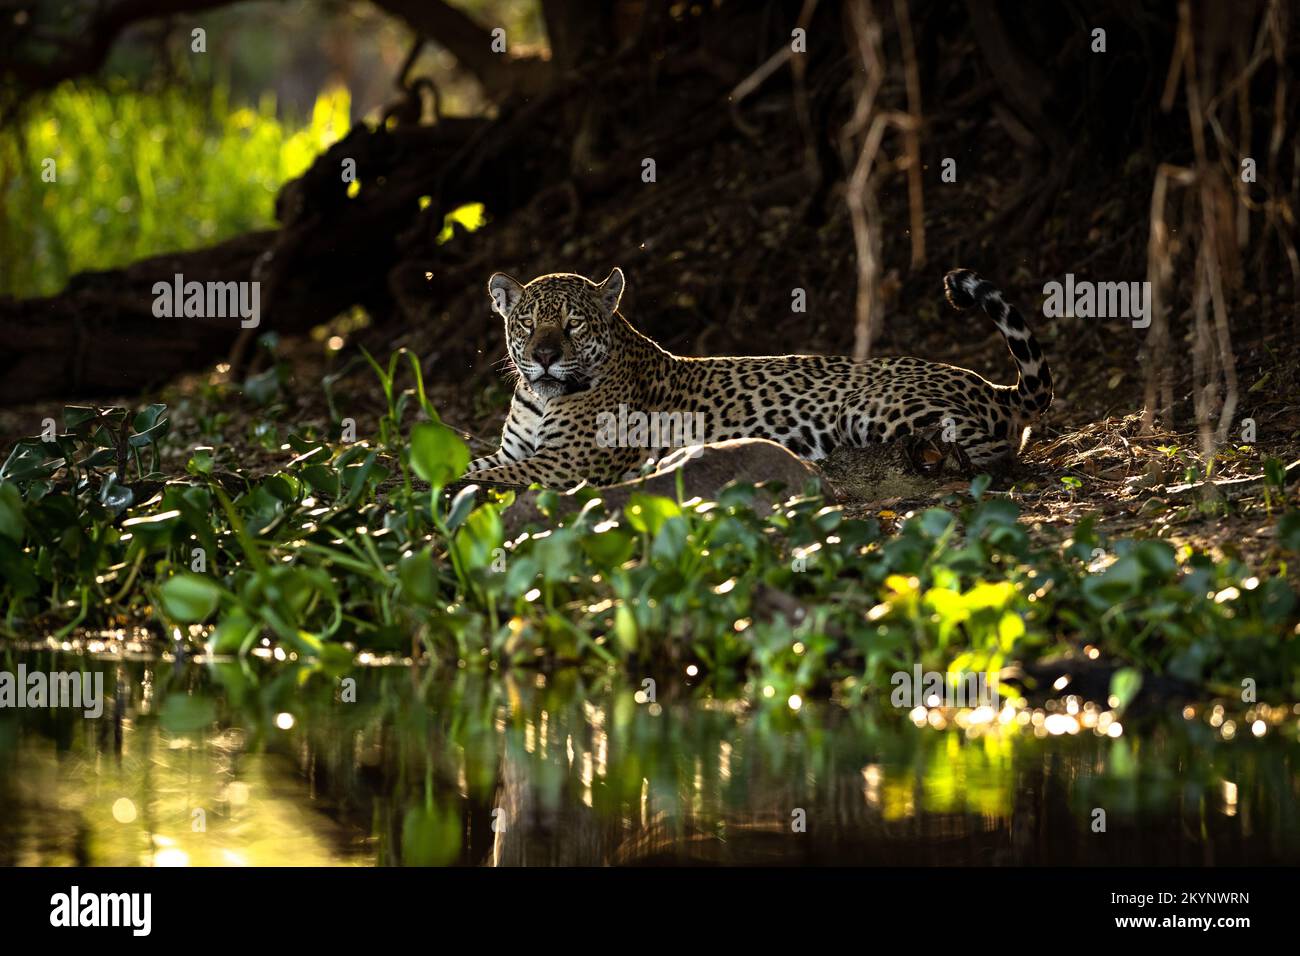 A Jaguar in the Pantanal of Brazil. Stock Photo